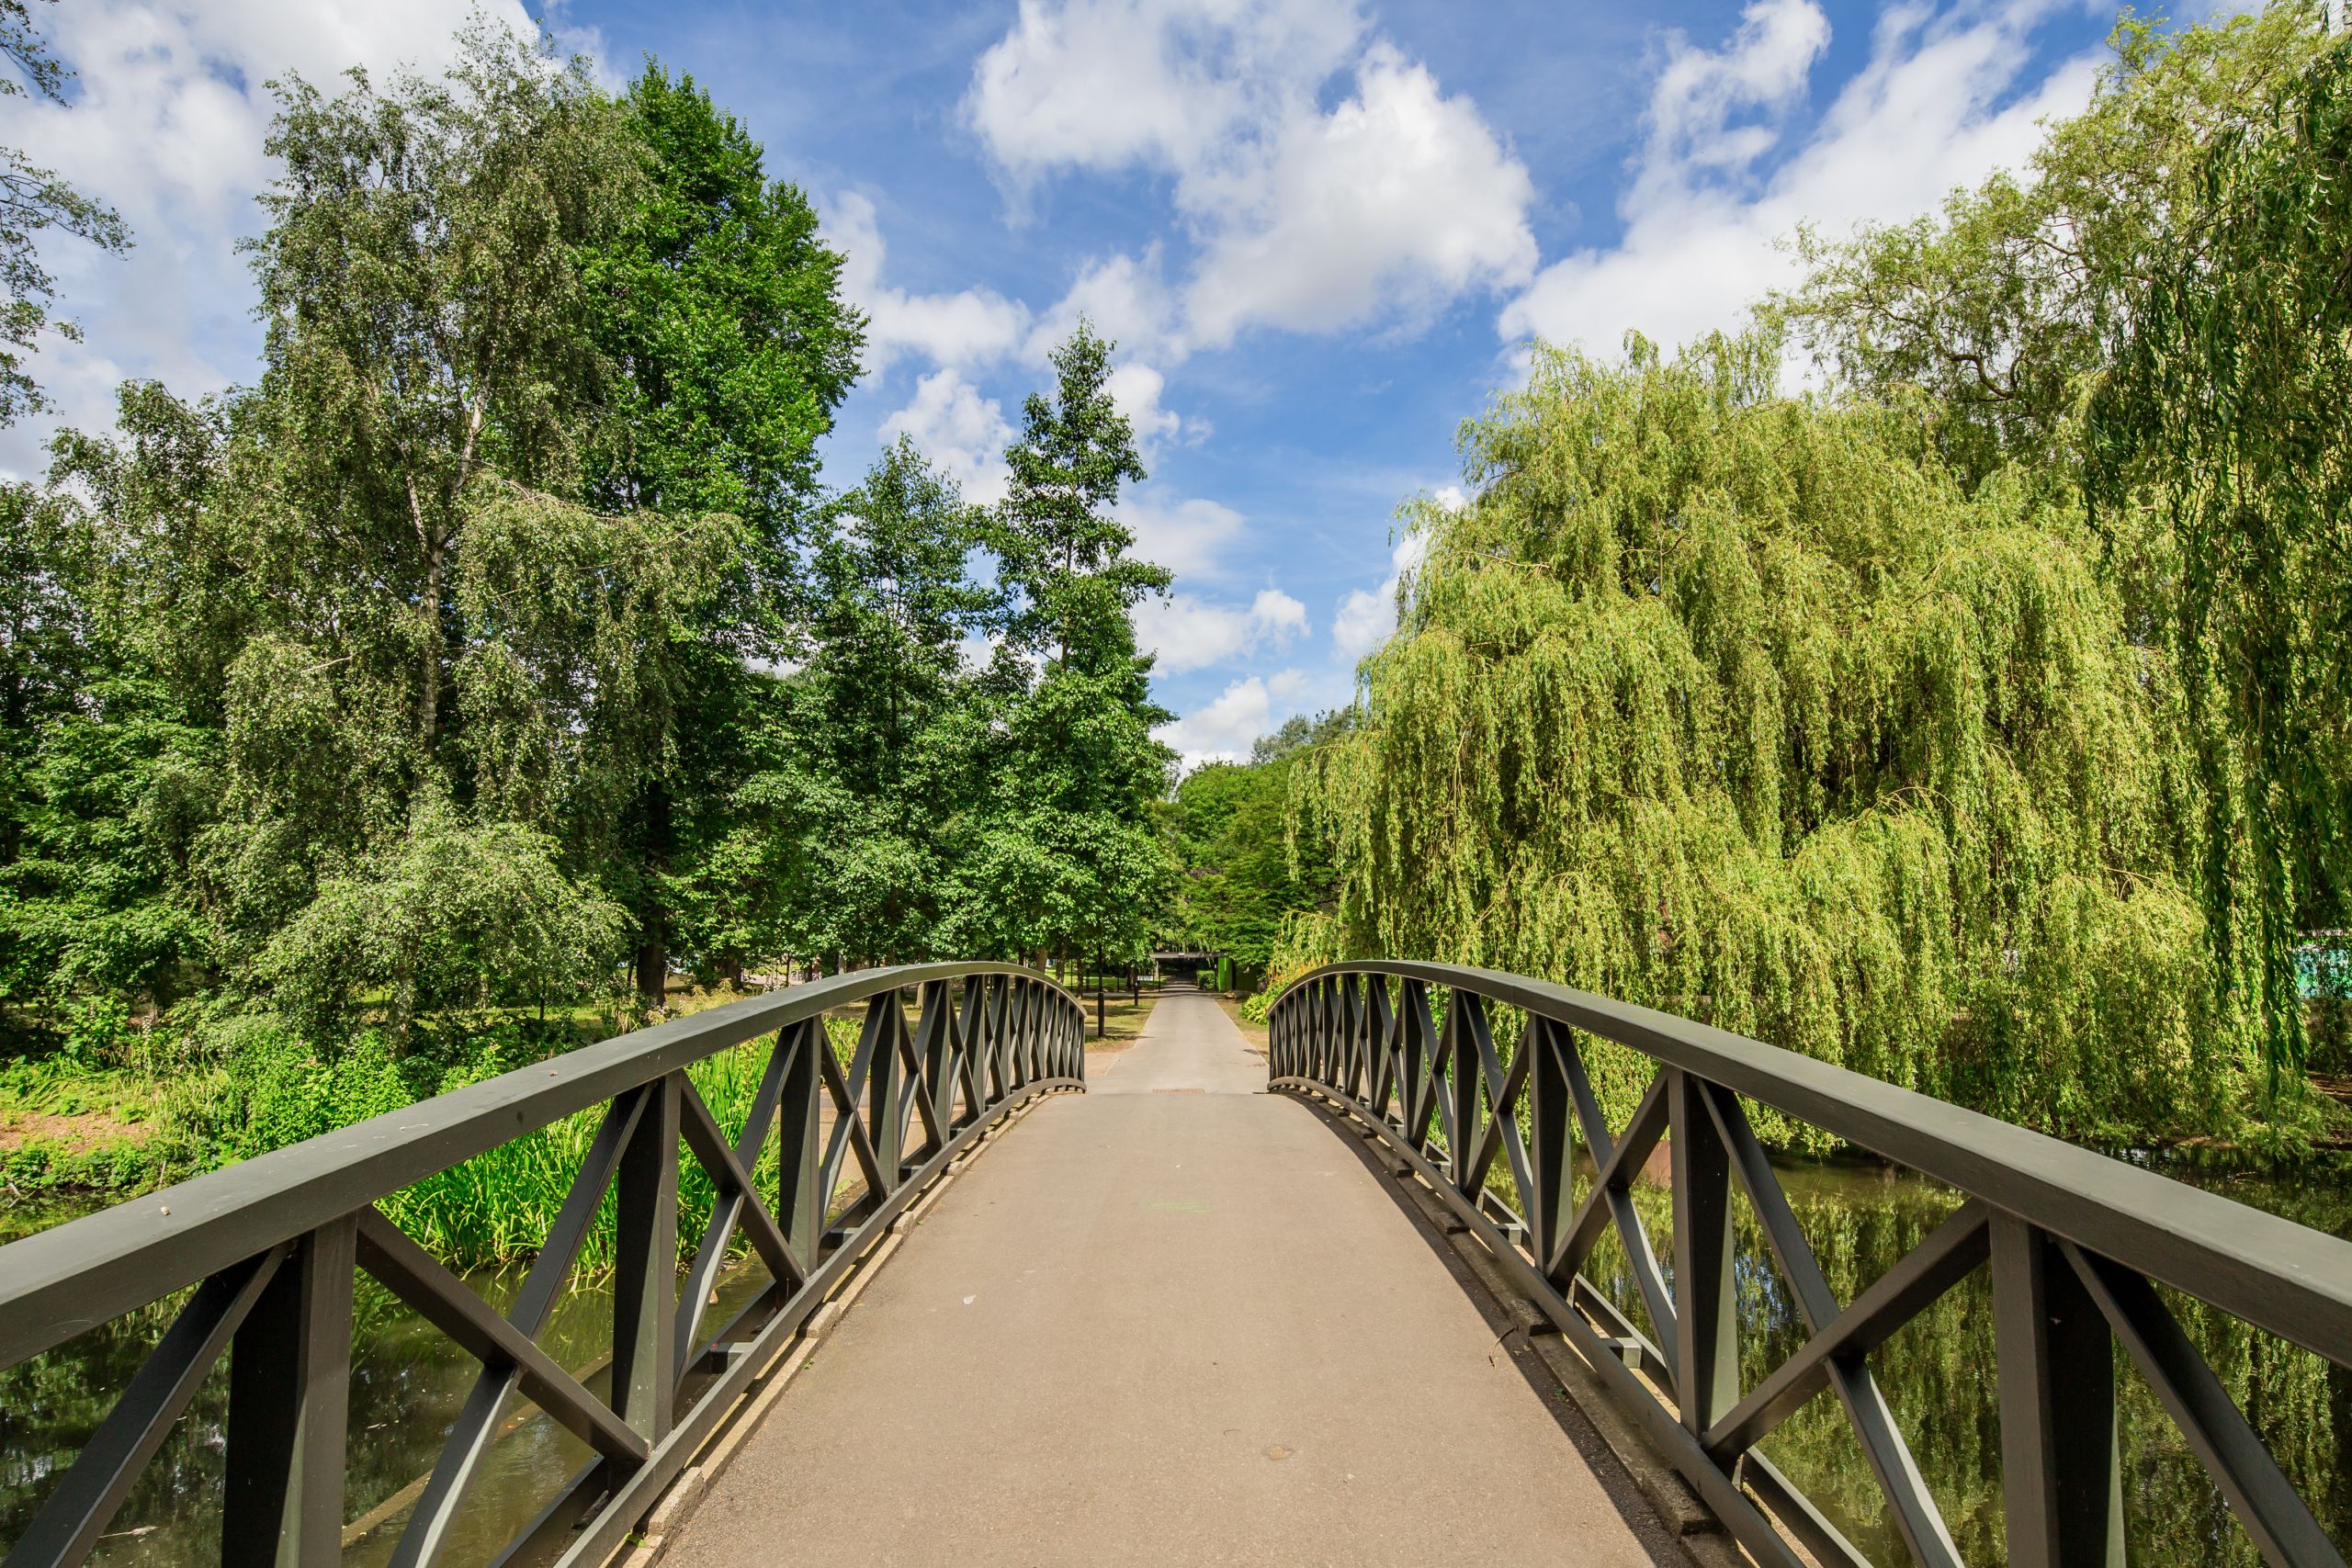 Image shows bridge with greenery